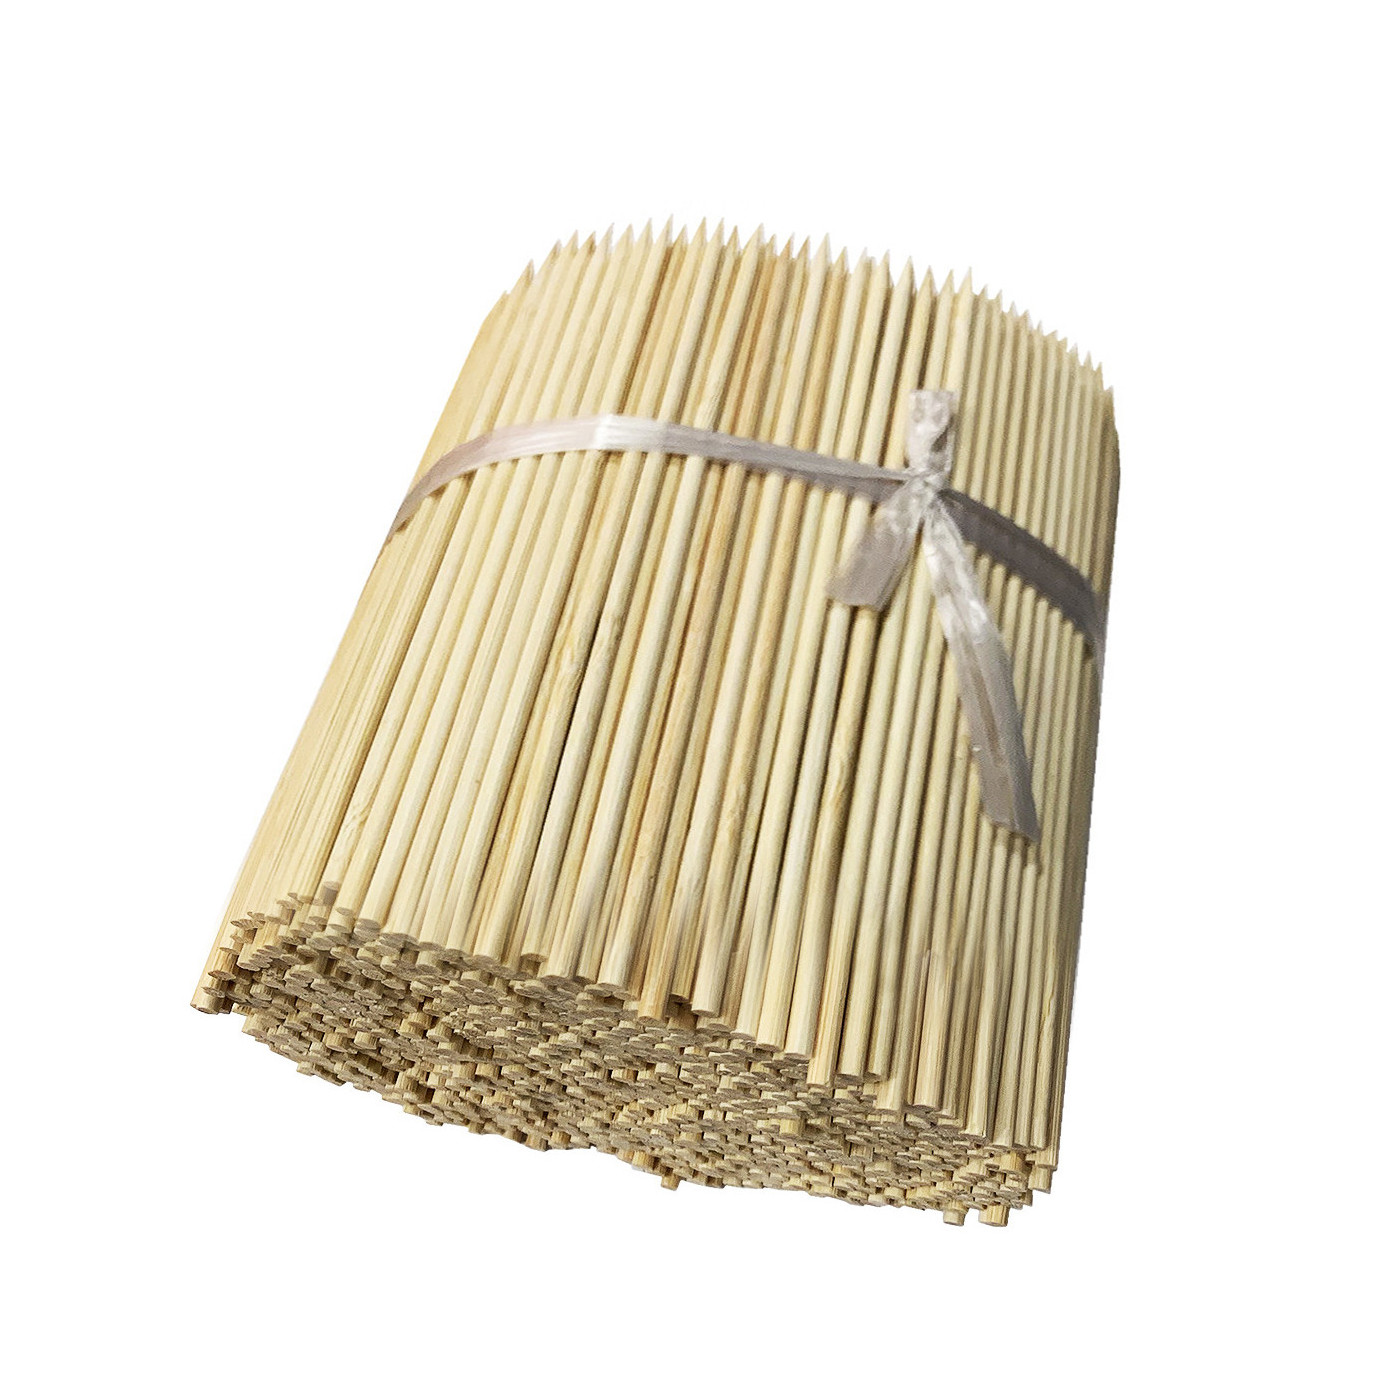 Conjunto de 200 varas de bambu (3,5 mm x 25 cm)